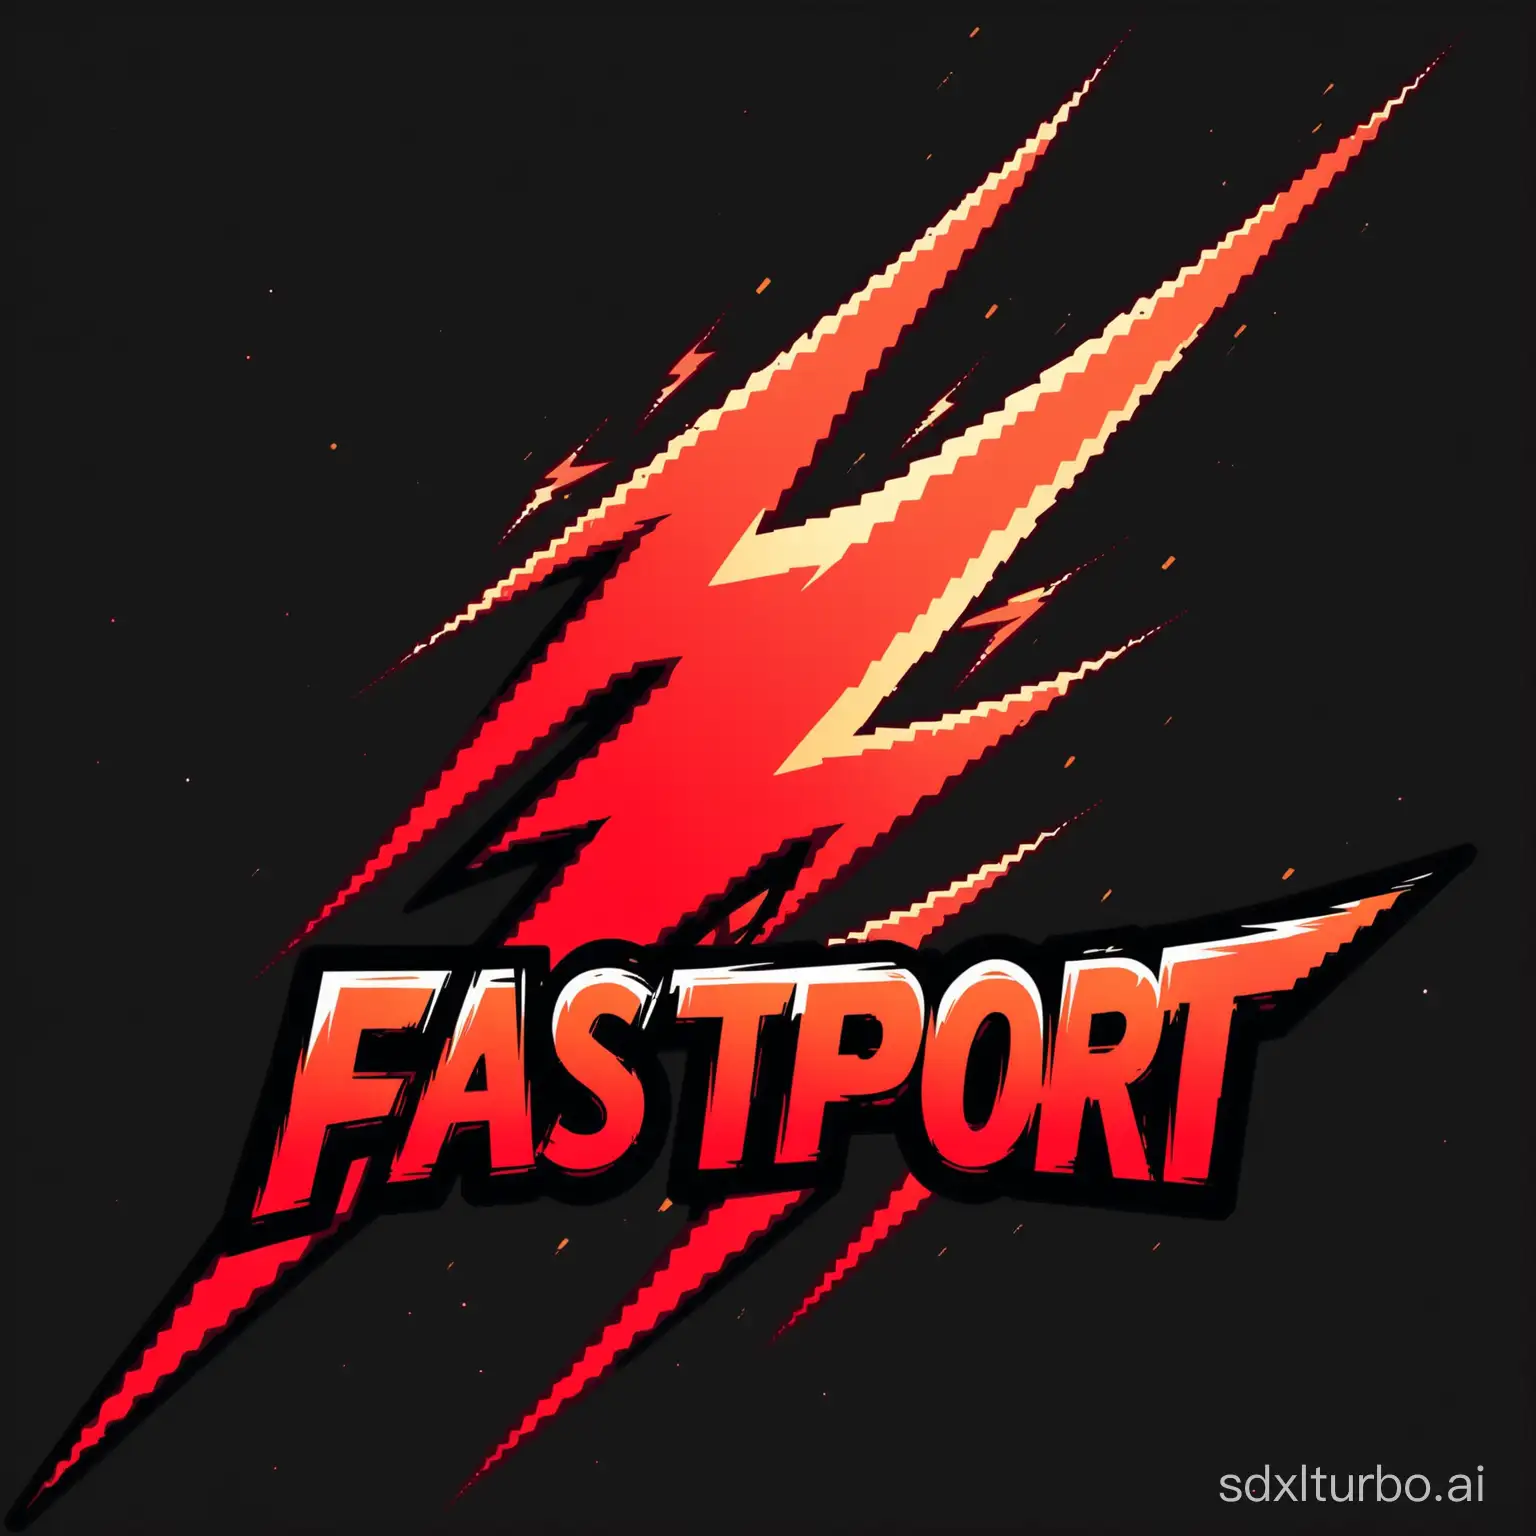 Dynamic-Red-Lightning-Bolt-Logo-on-Black-Background